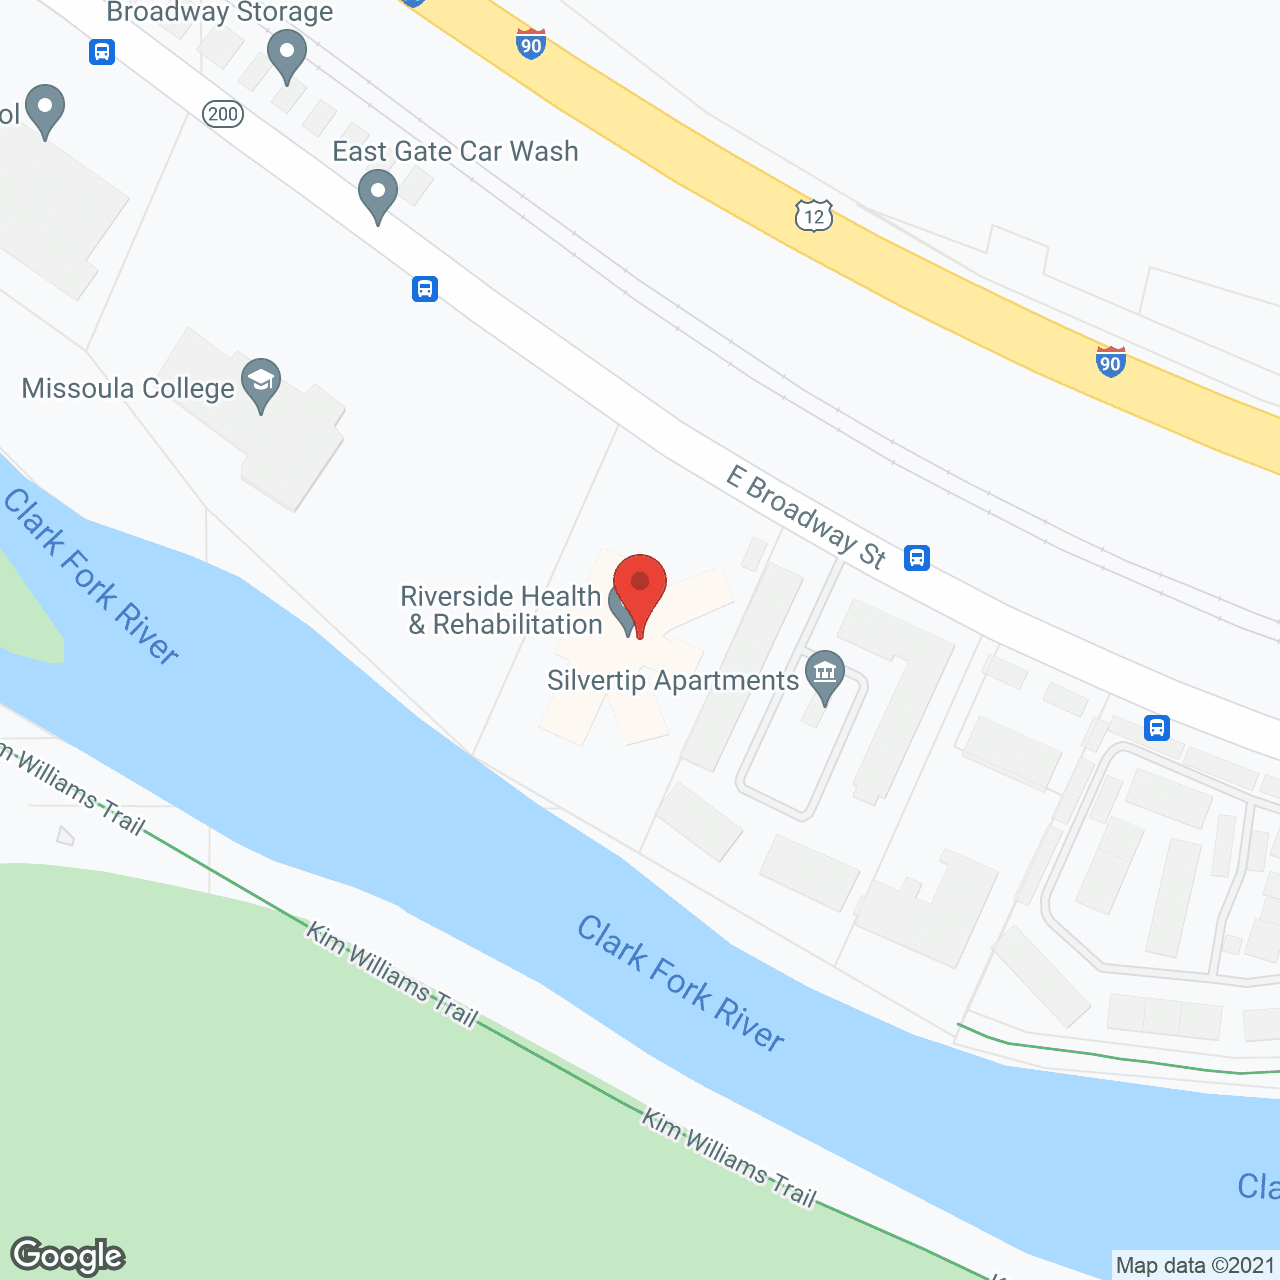 Riverside Health Care Center in google map